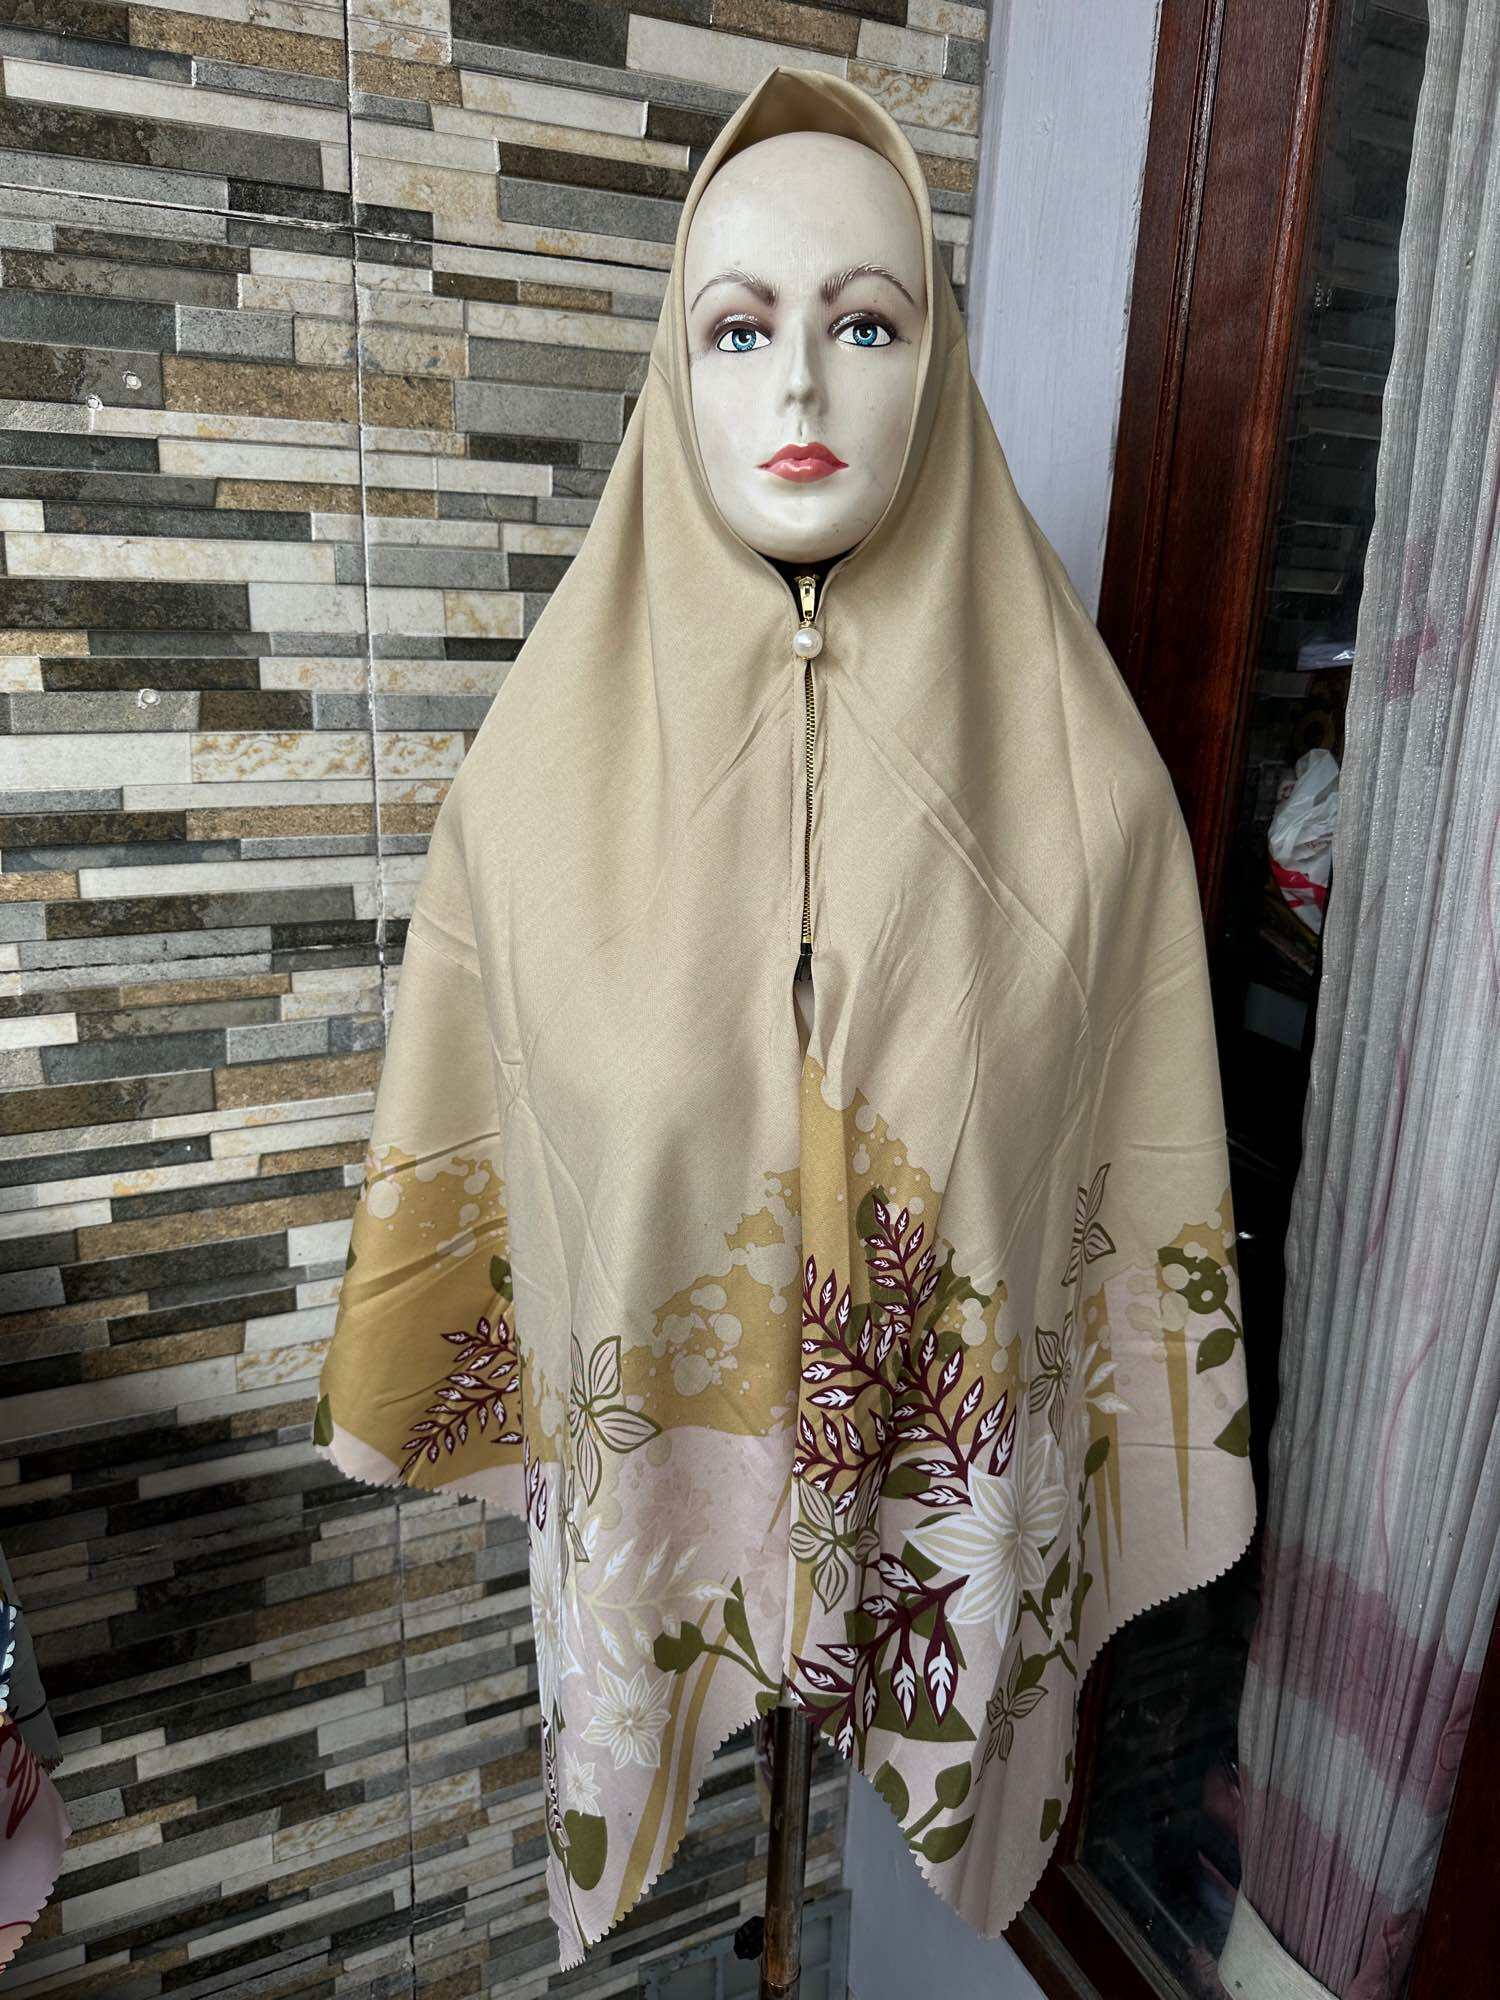 Jual Hijab Kerudung Jilbab Segiempat Maxmara Square Motif Big LV